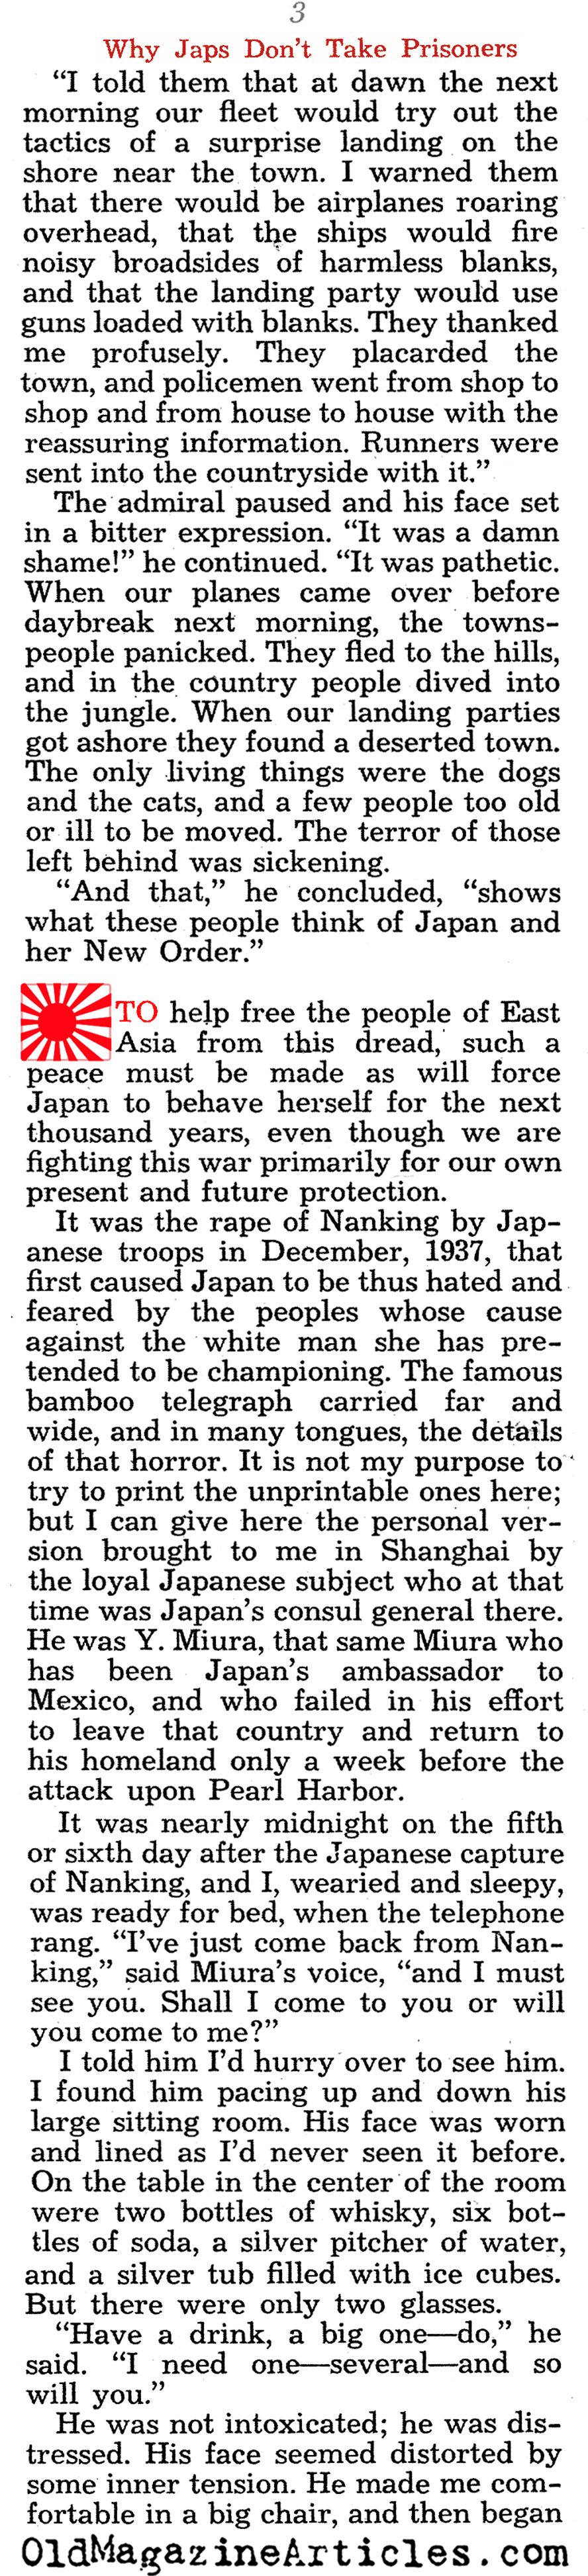 Japanese Atrocities in China (Liberty Magazine, 1942)